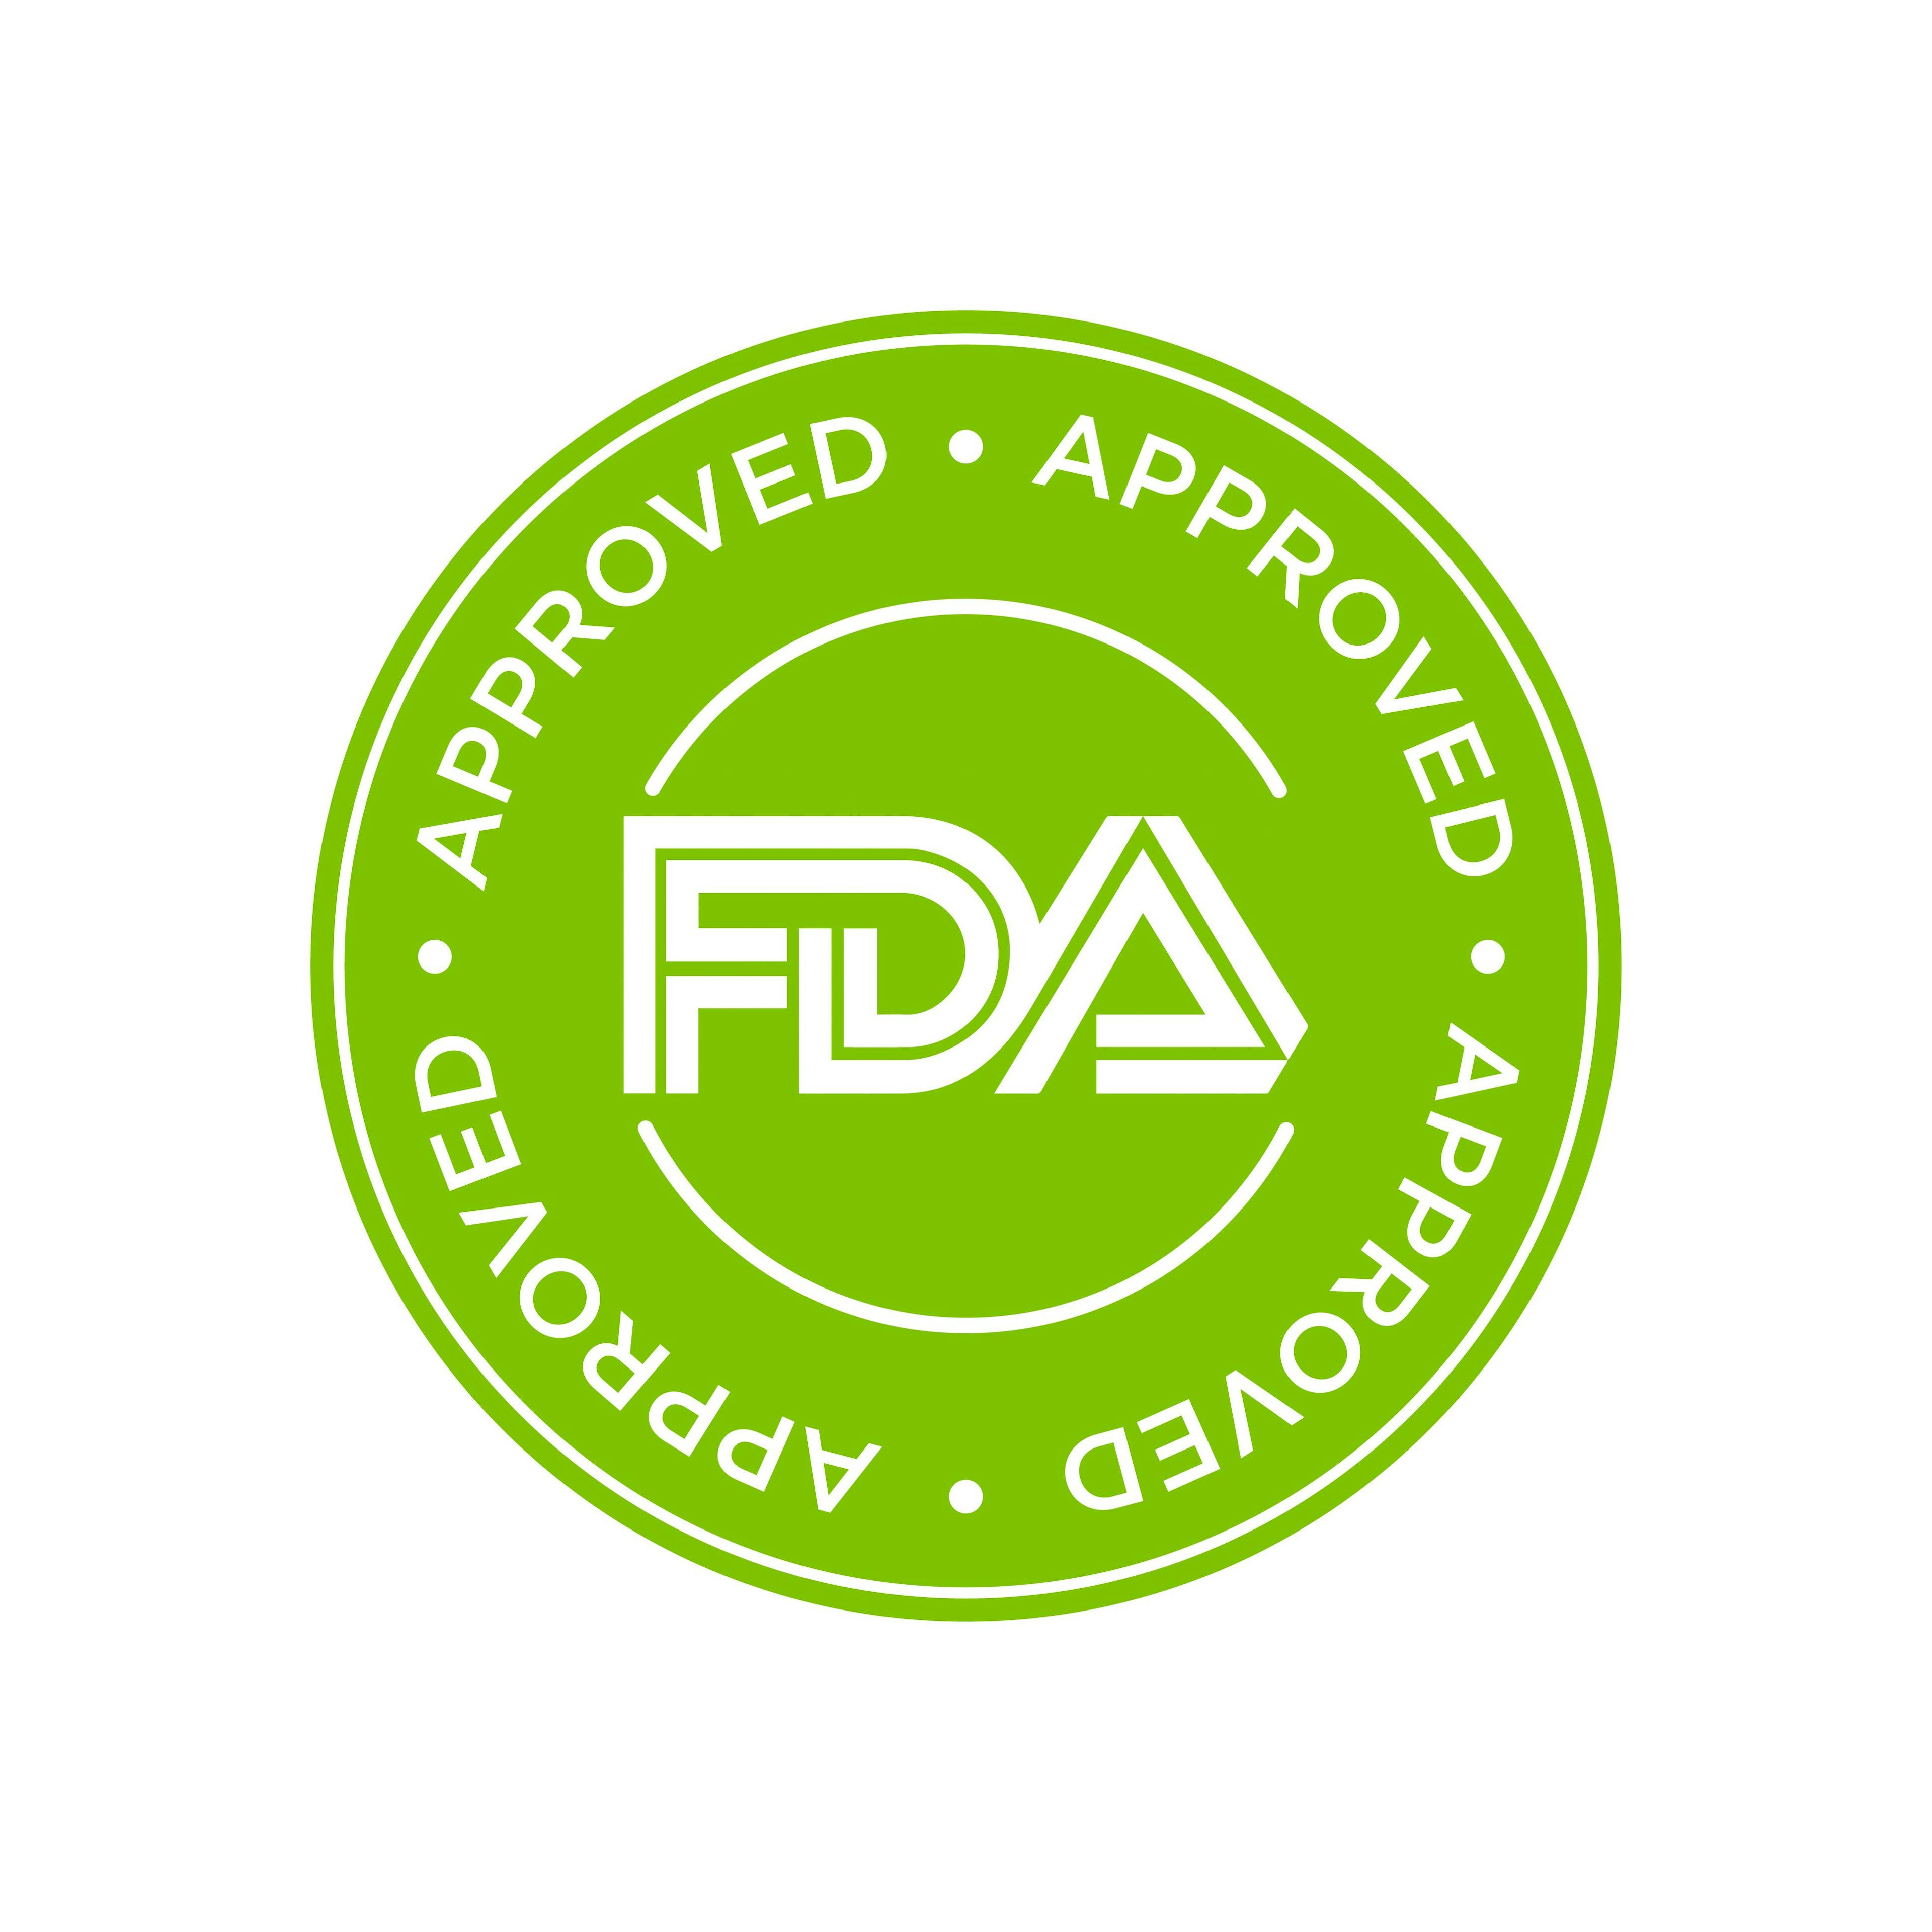 FDA Approved | Image Credit: Lia Aramburu – stock.adobe.com